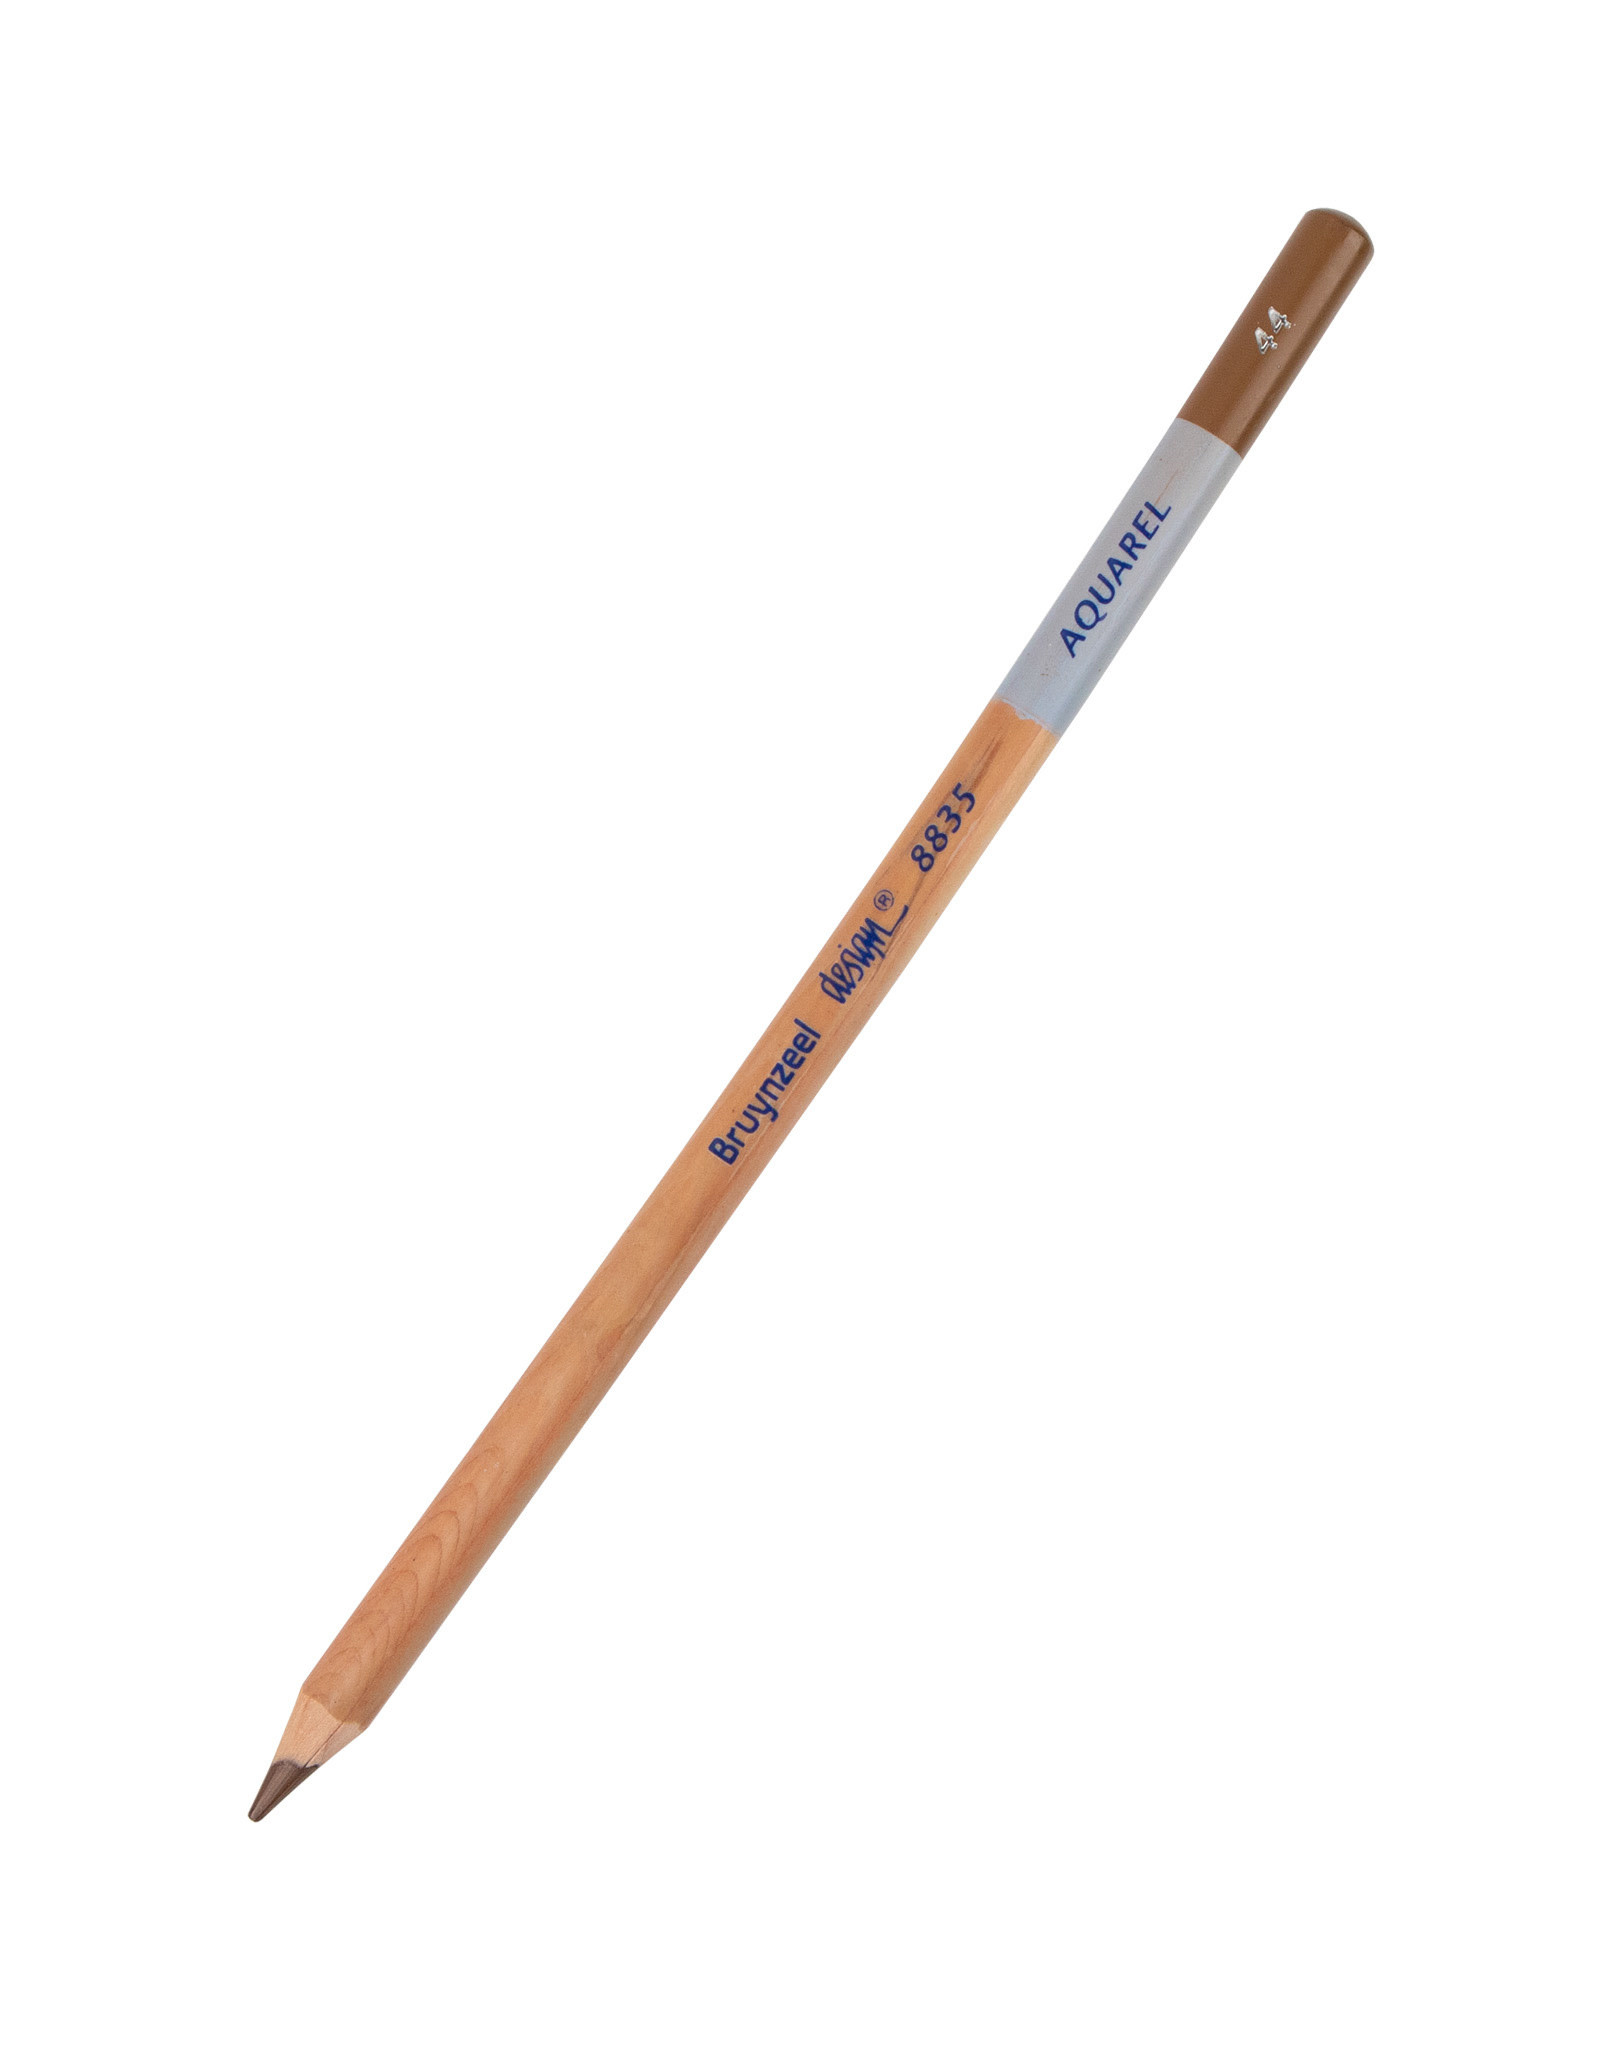 Royal Talens Bruynzeel Design Aquarel Pencil, Brown